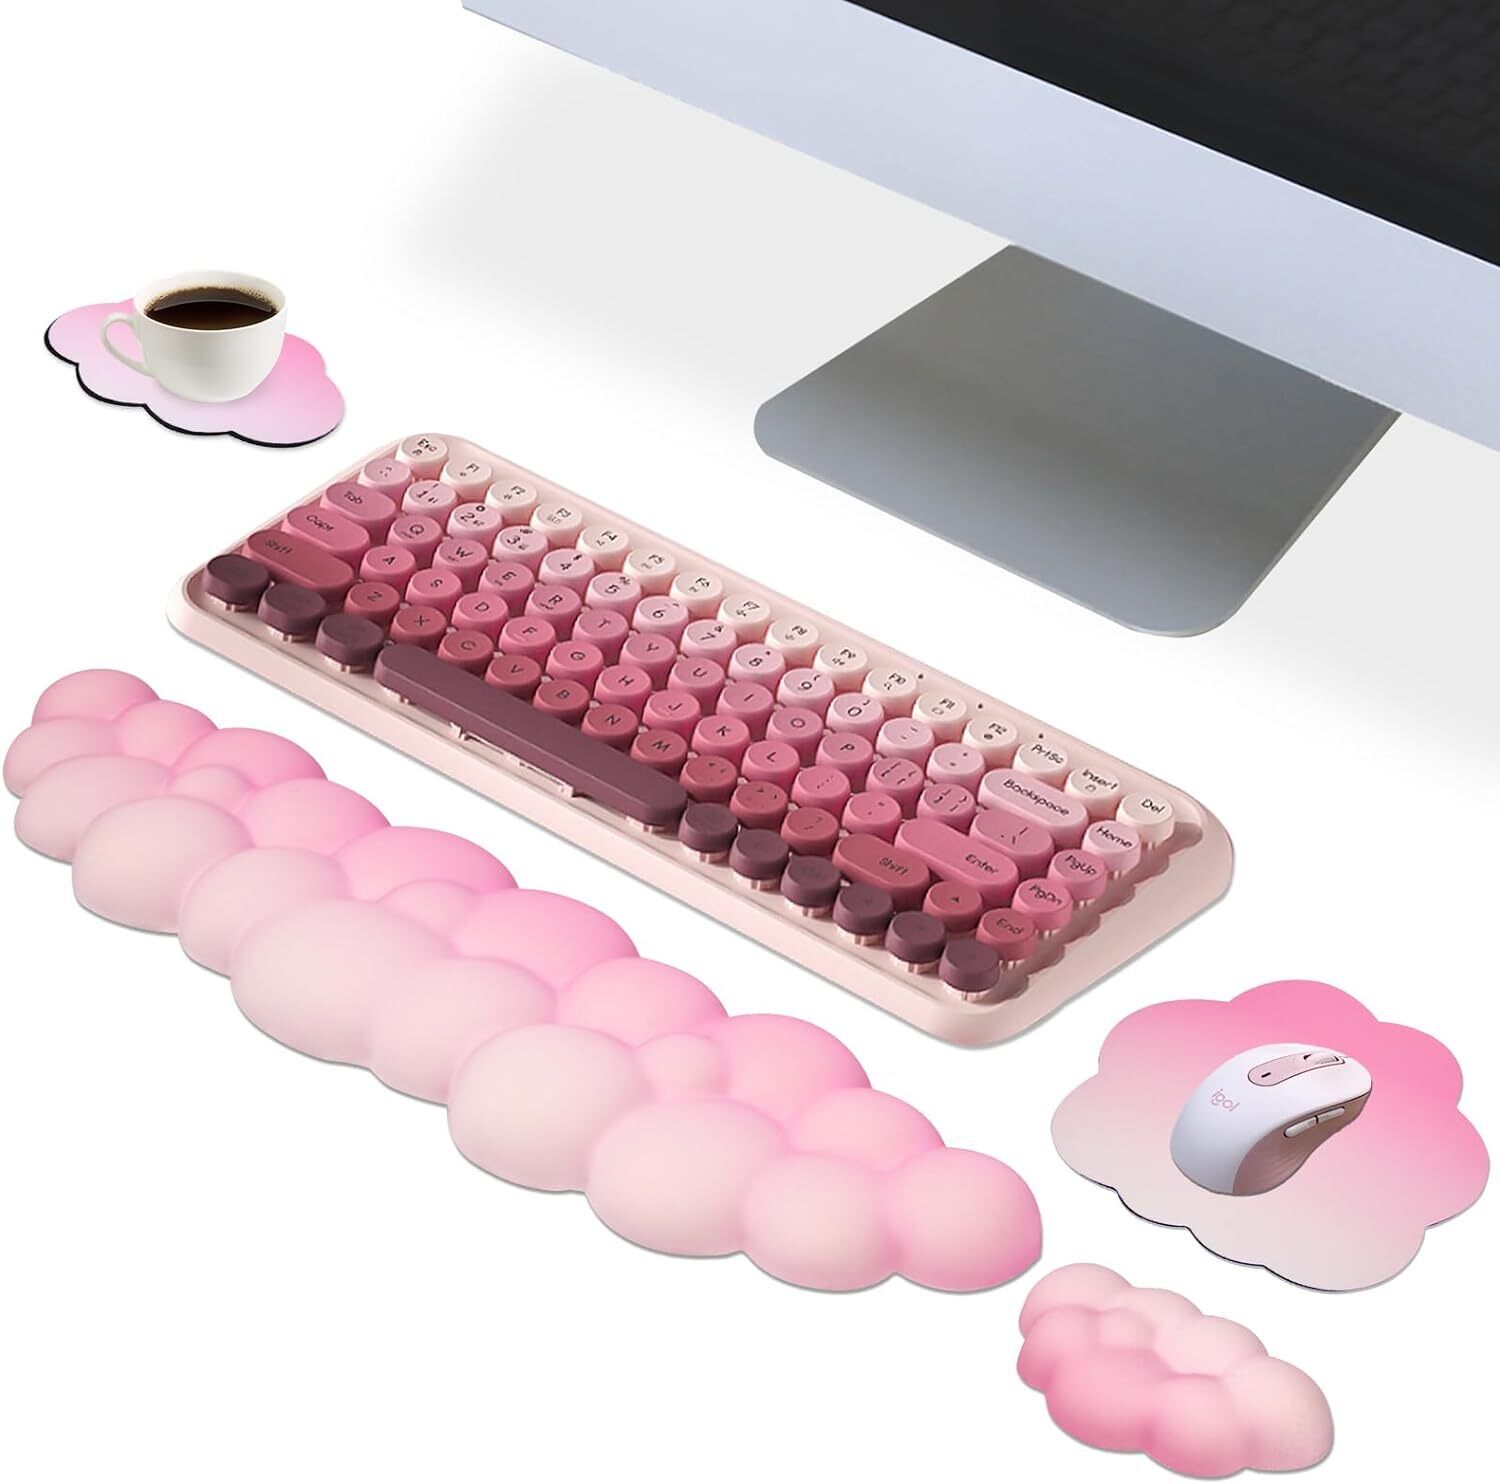 Cloud Mouse Pad and Keyboard Wrist Rest Set,4 Pcs Pink Ergonomic Small, 